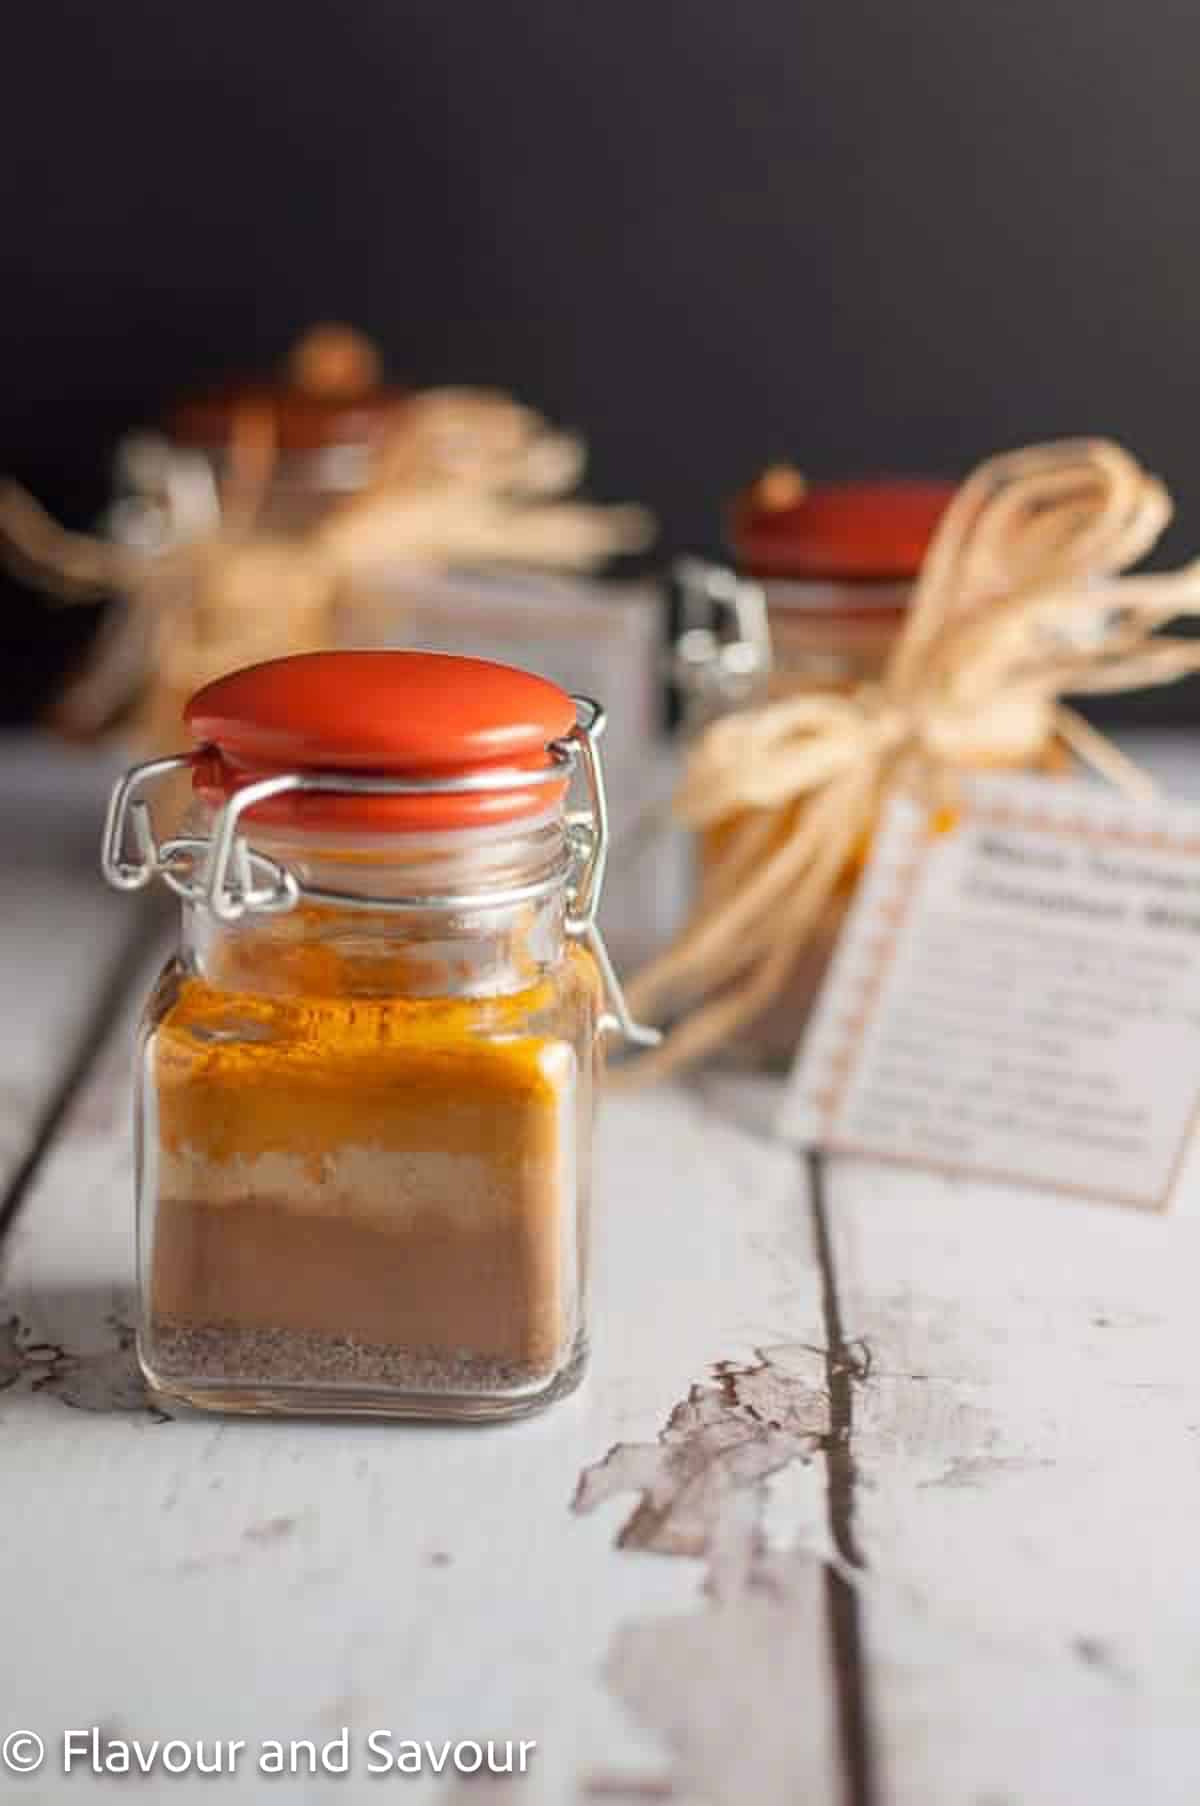 Tiny jars of warm turmeric cinnamon milk spice mix with gift tags, tied with raffia.